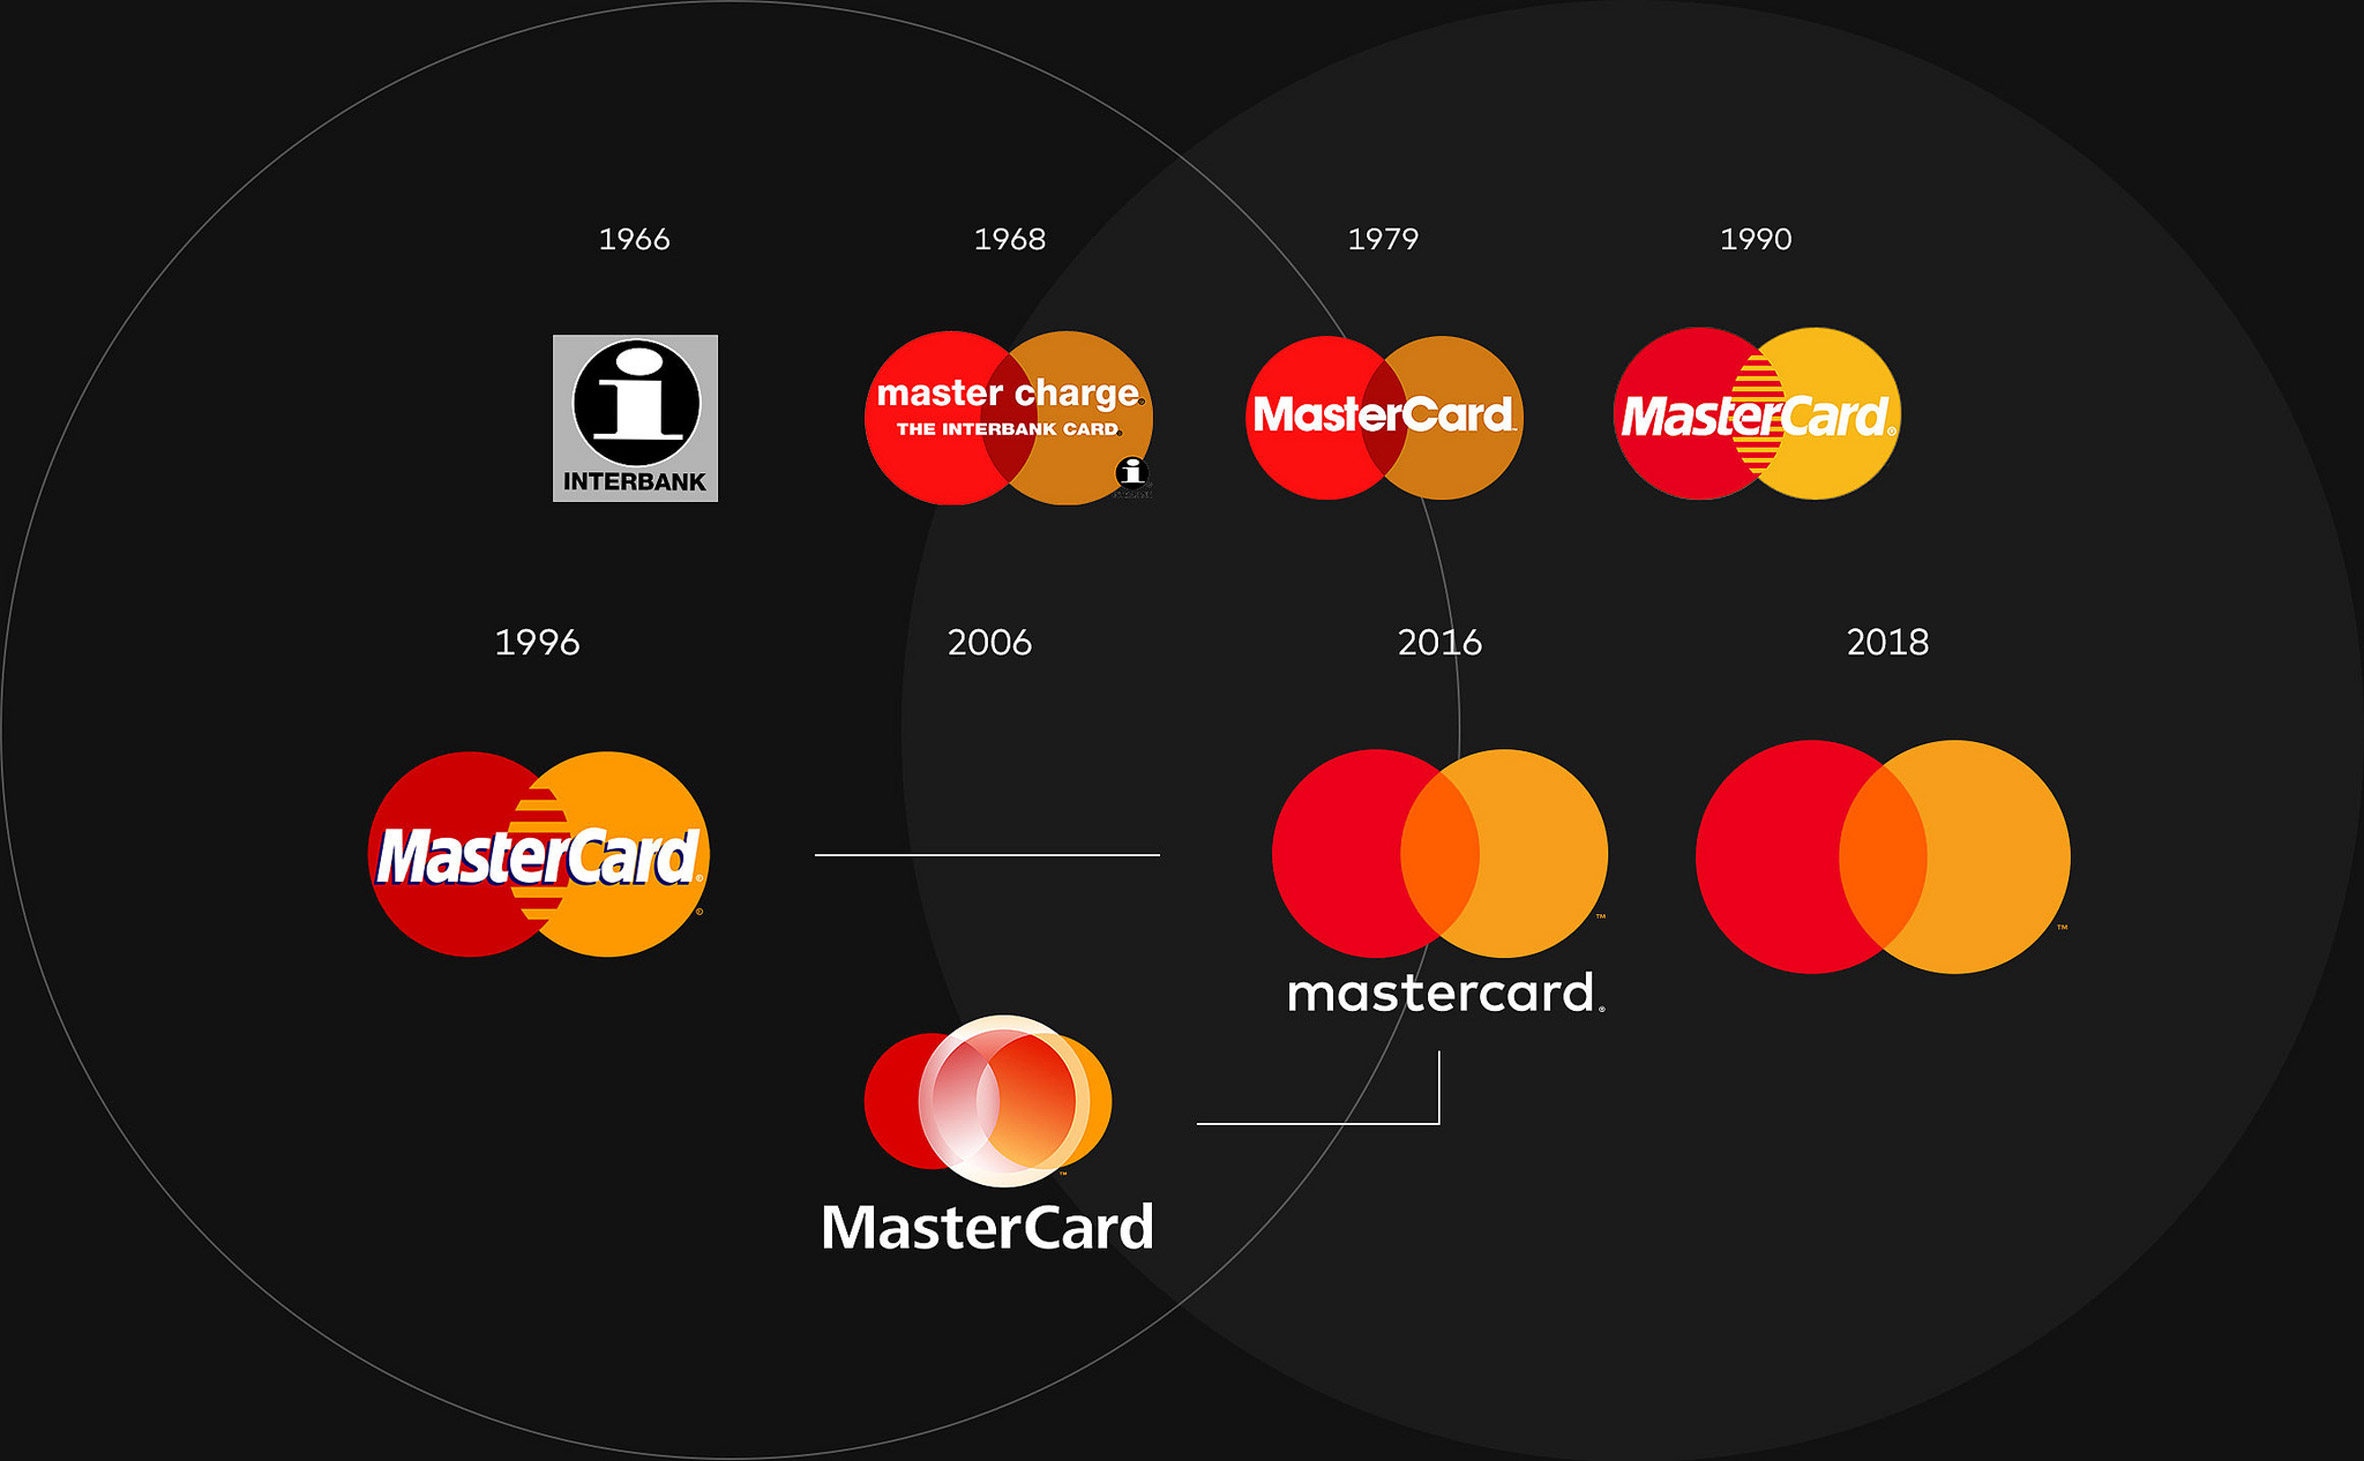 Pentagram's Mastercard rebrand drops credit card company's name from logo